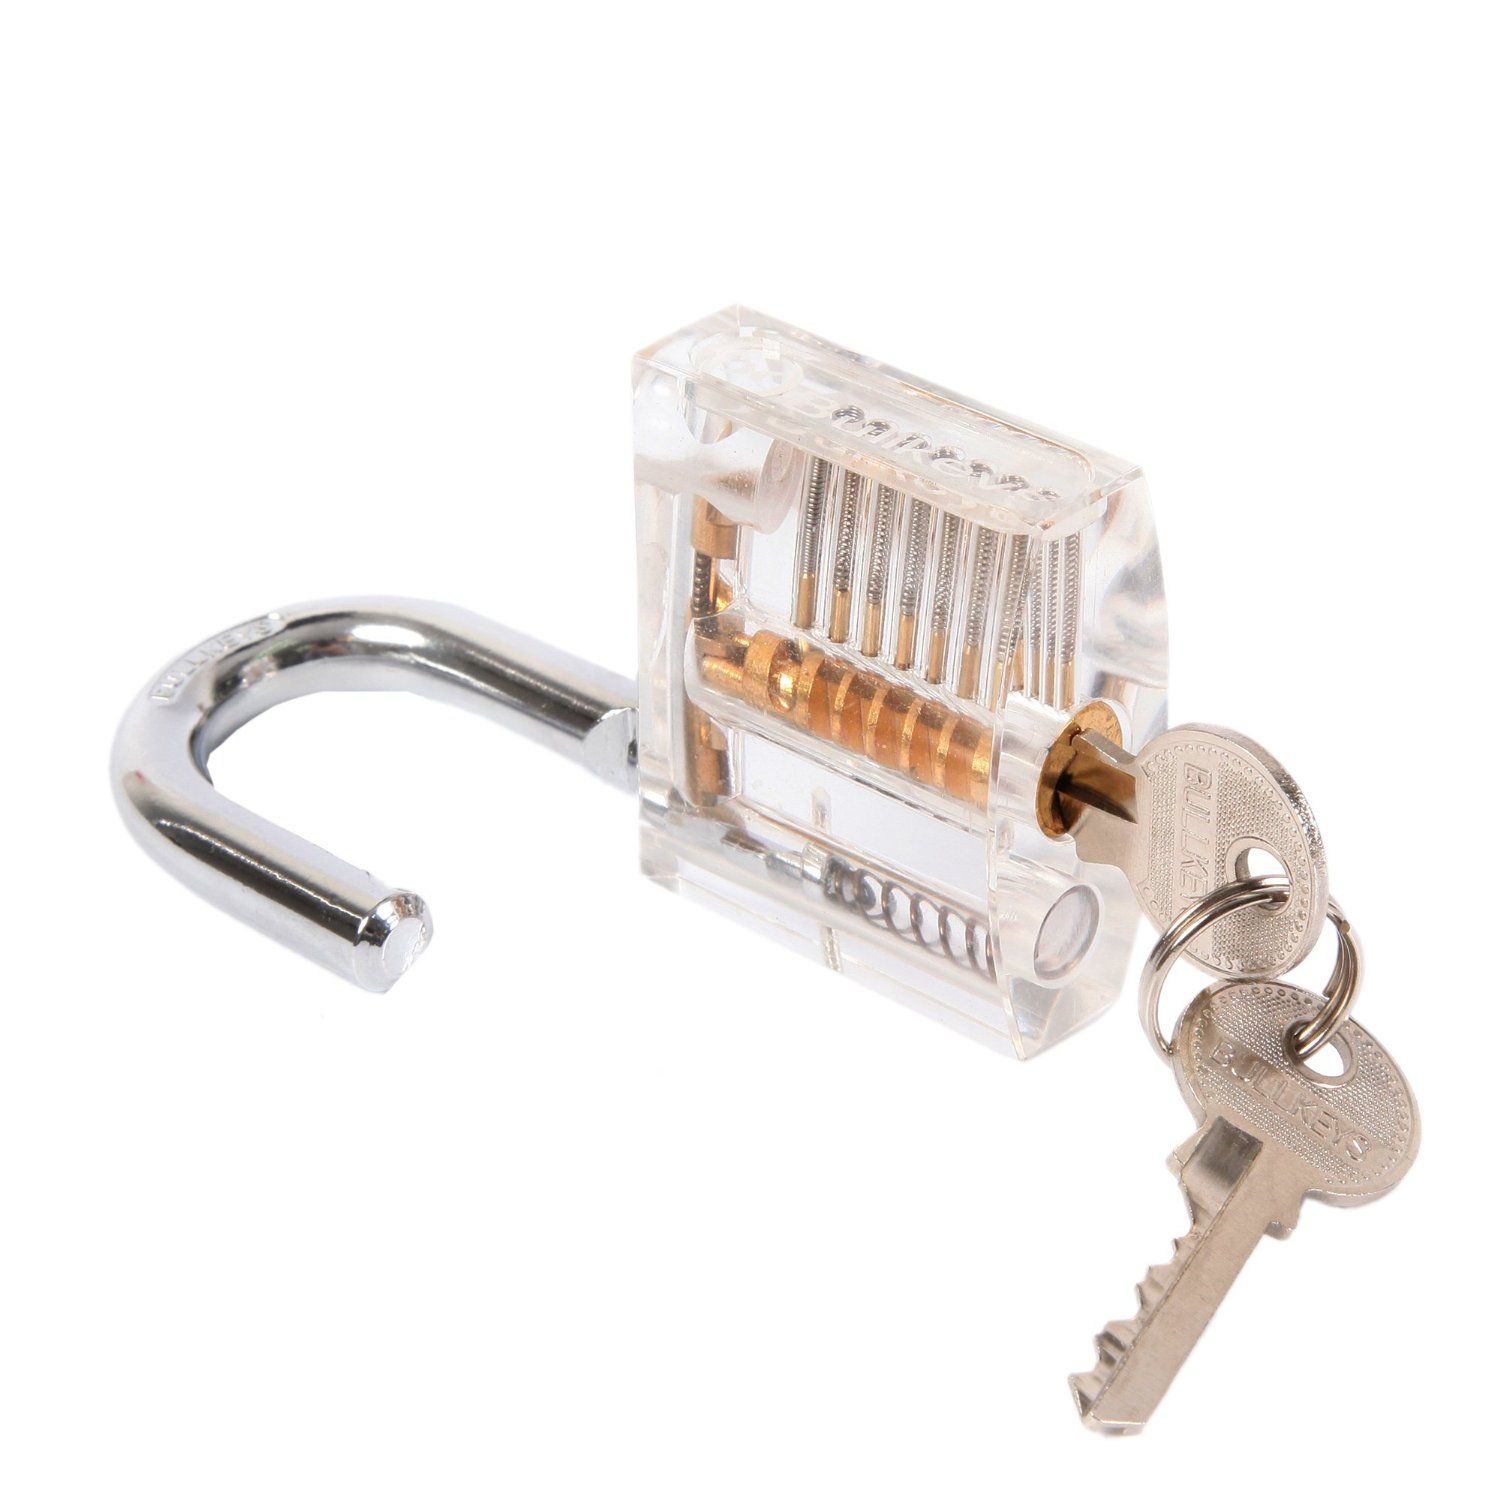 15 stks Unlocking Lock Pick Tool Hook Lock Picks Locksmith Tools + 5 Stks Lock Picking Tools Sets met Transparante Practice Hangslot Locks